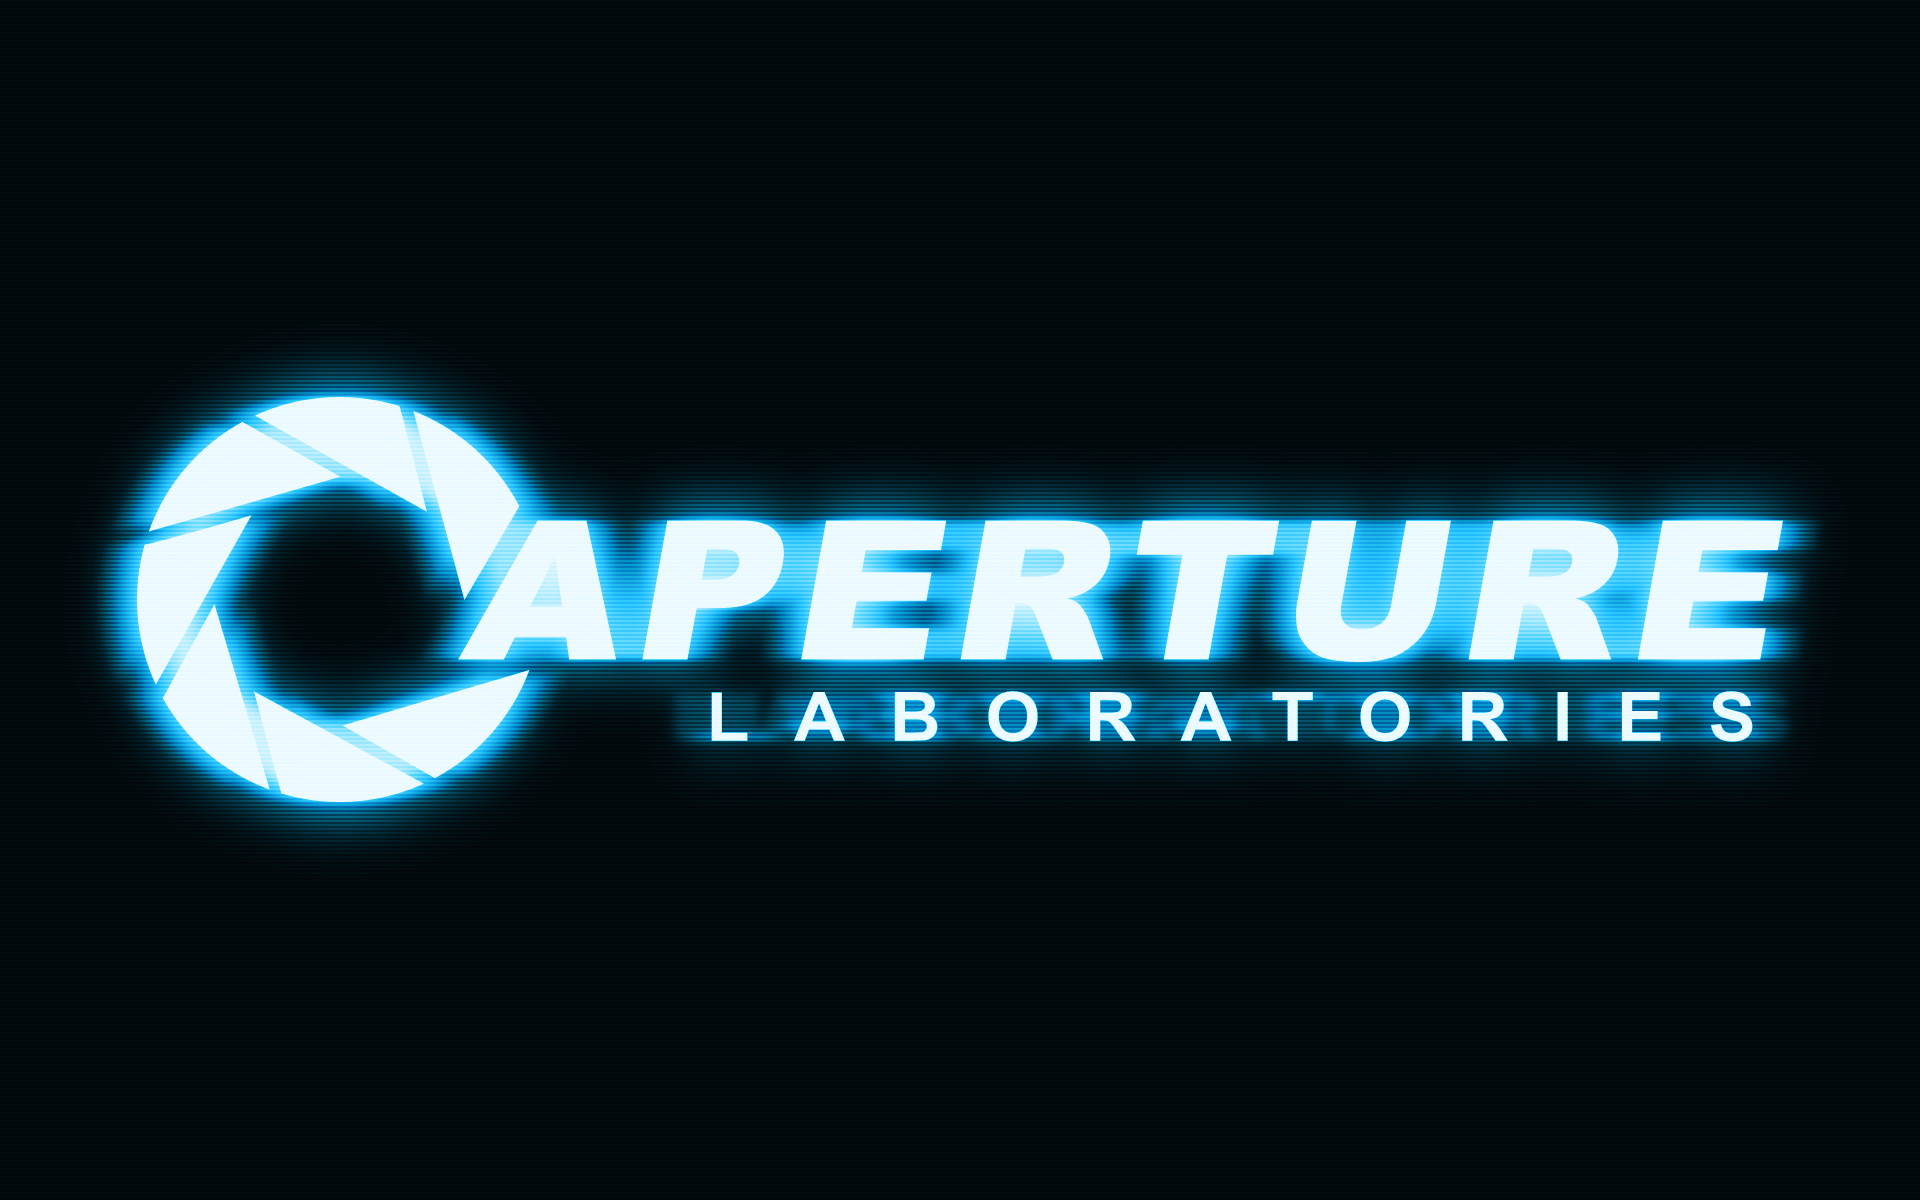  Portal Aperture Laboratories logos hd wallpaper   HD Wallpapers